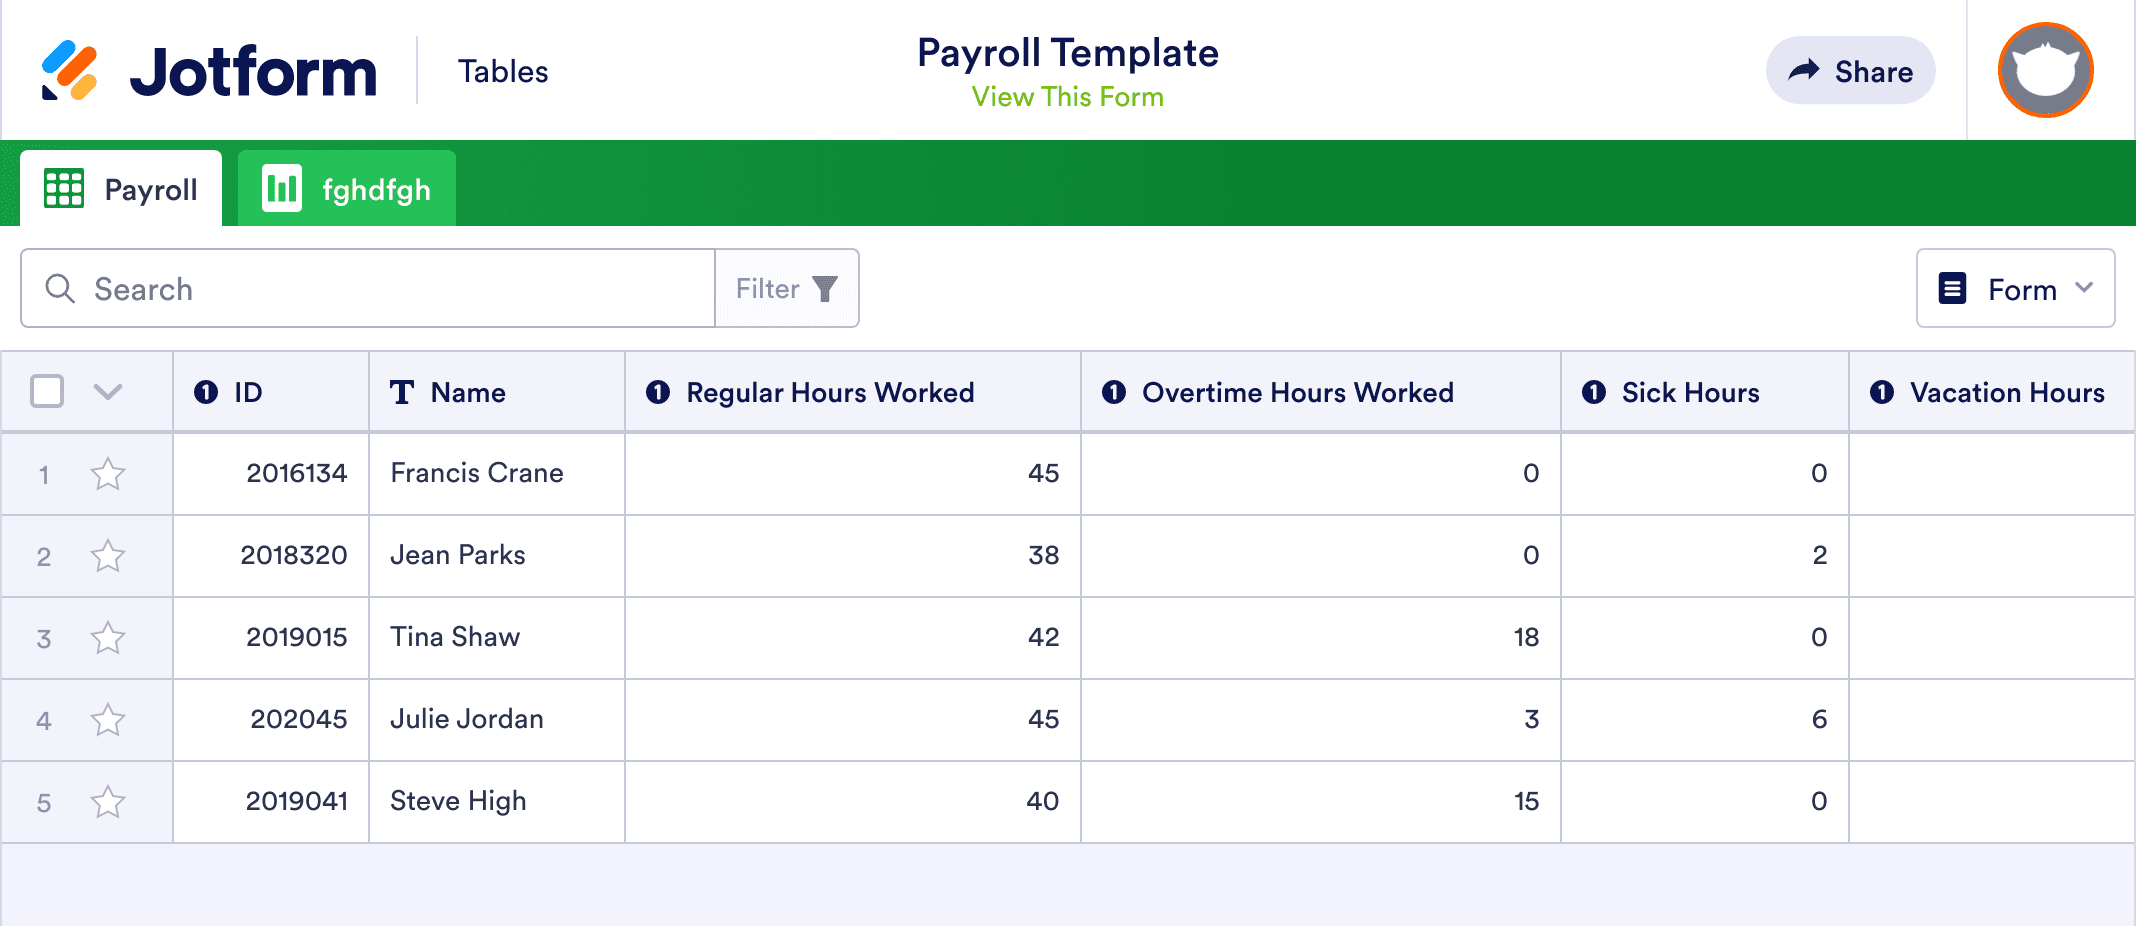 Payroll Template